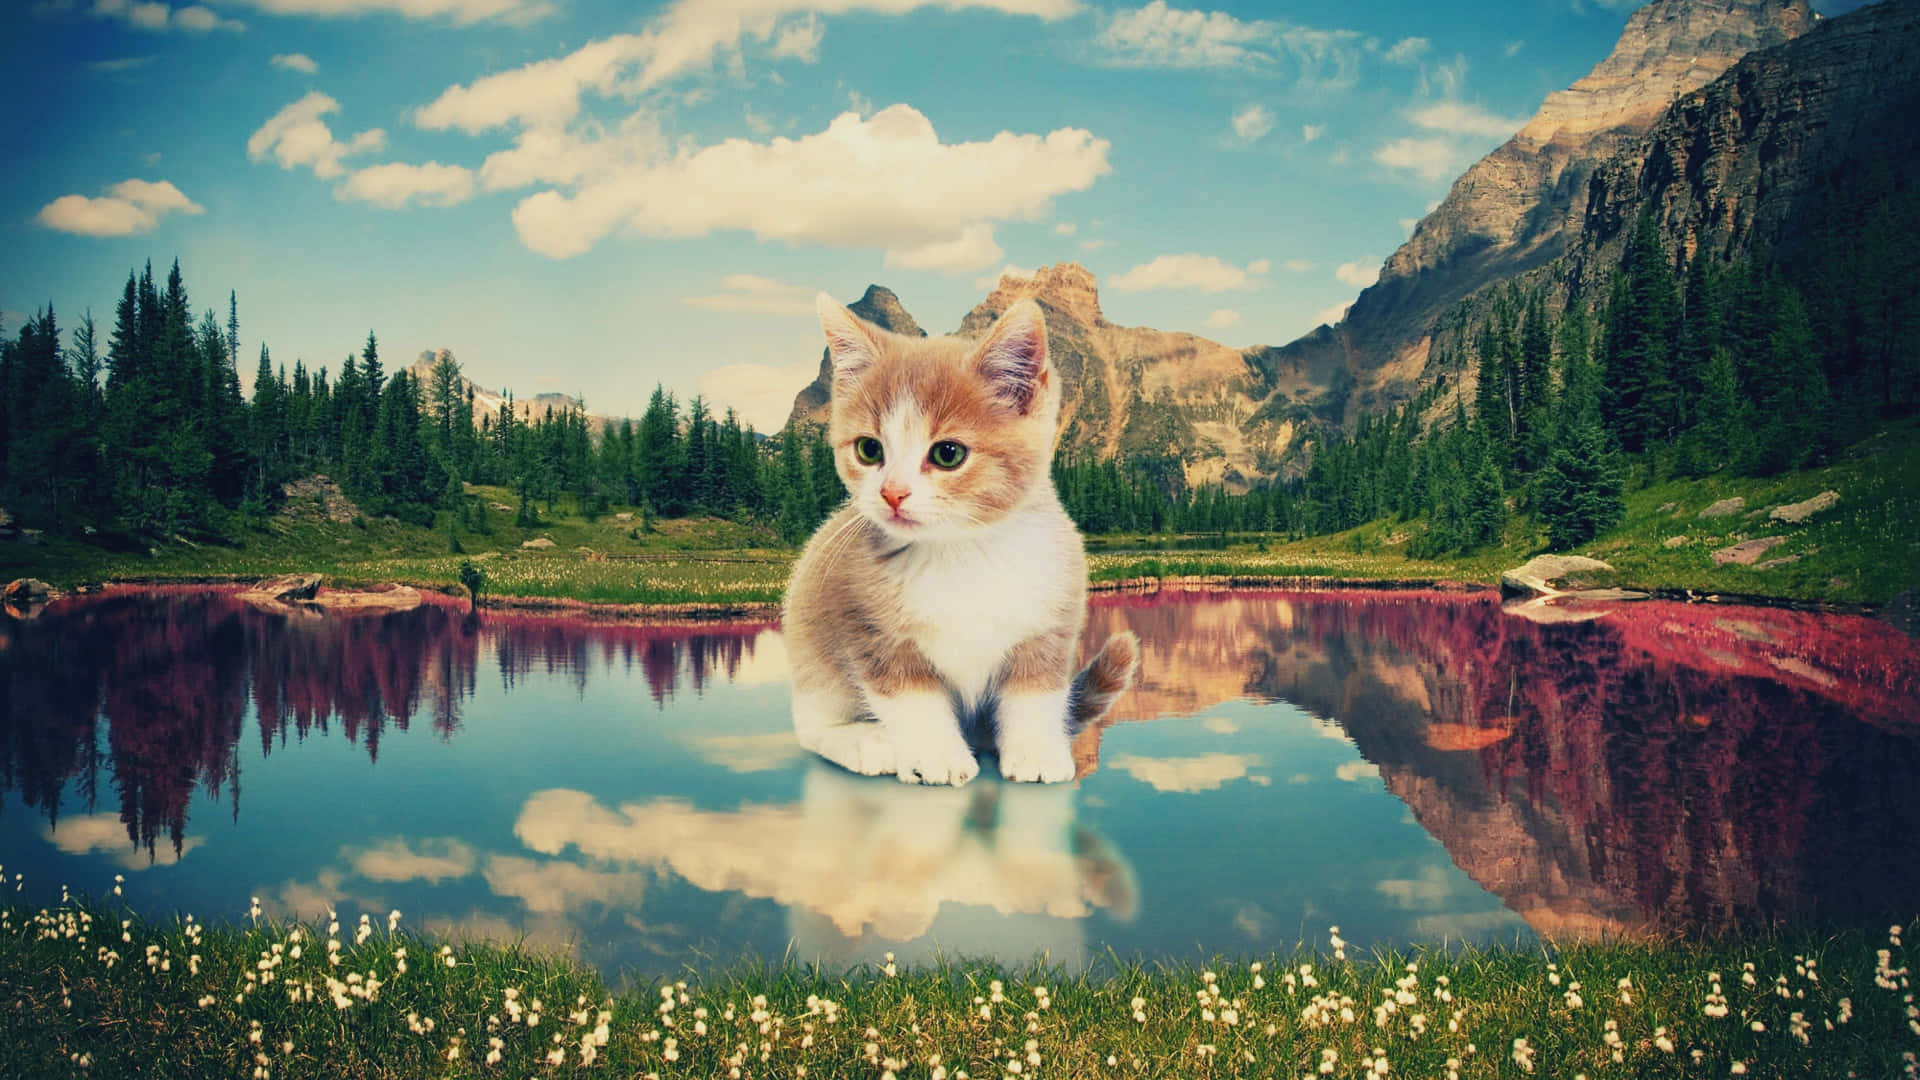 Giant Kitten On Lake Editing Background